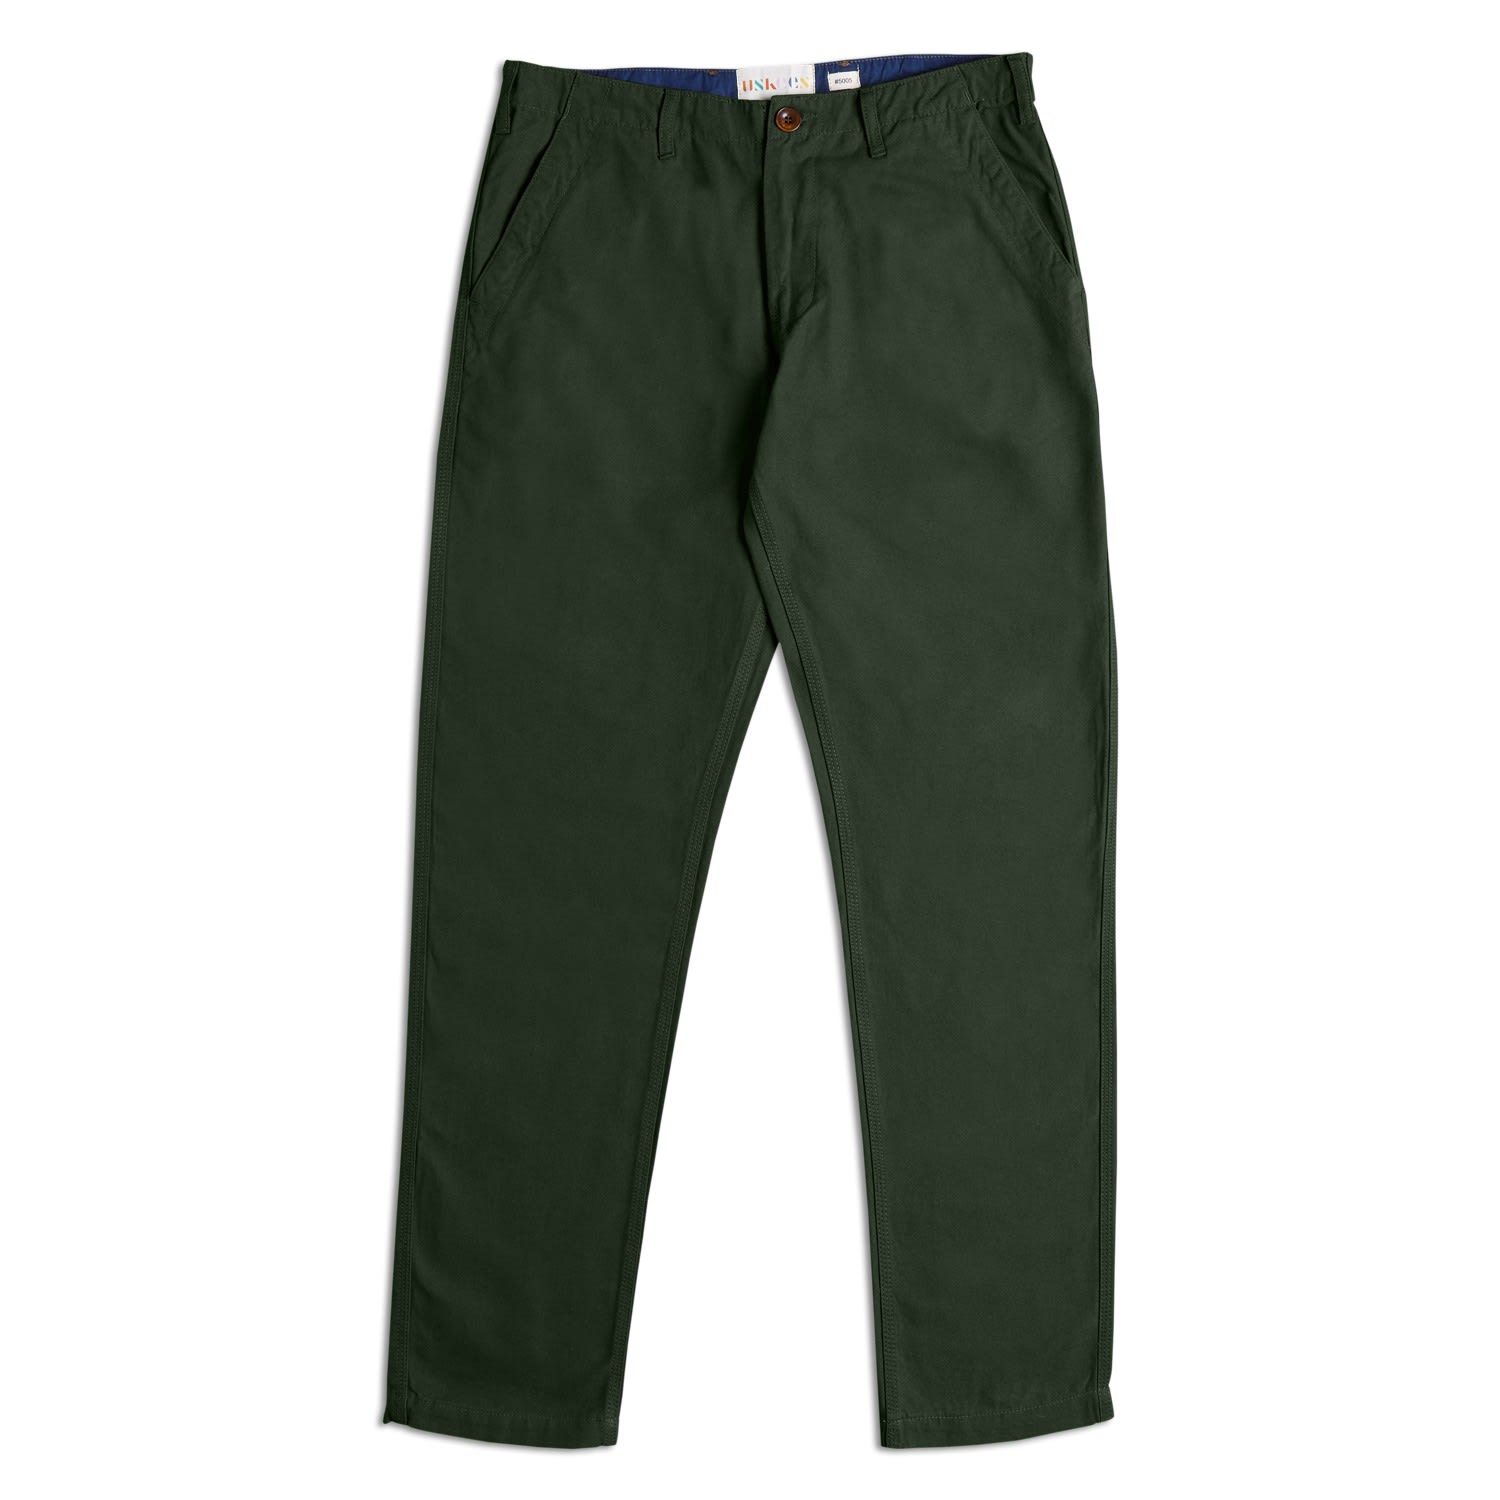 Uskees Men's The 5005 Workwear Pants - Vine Green